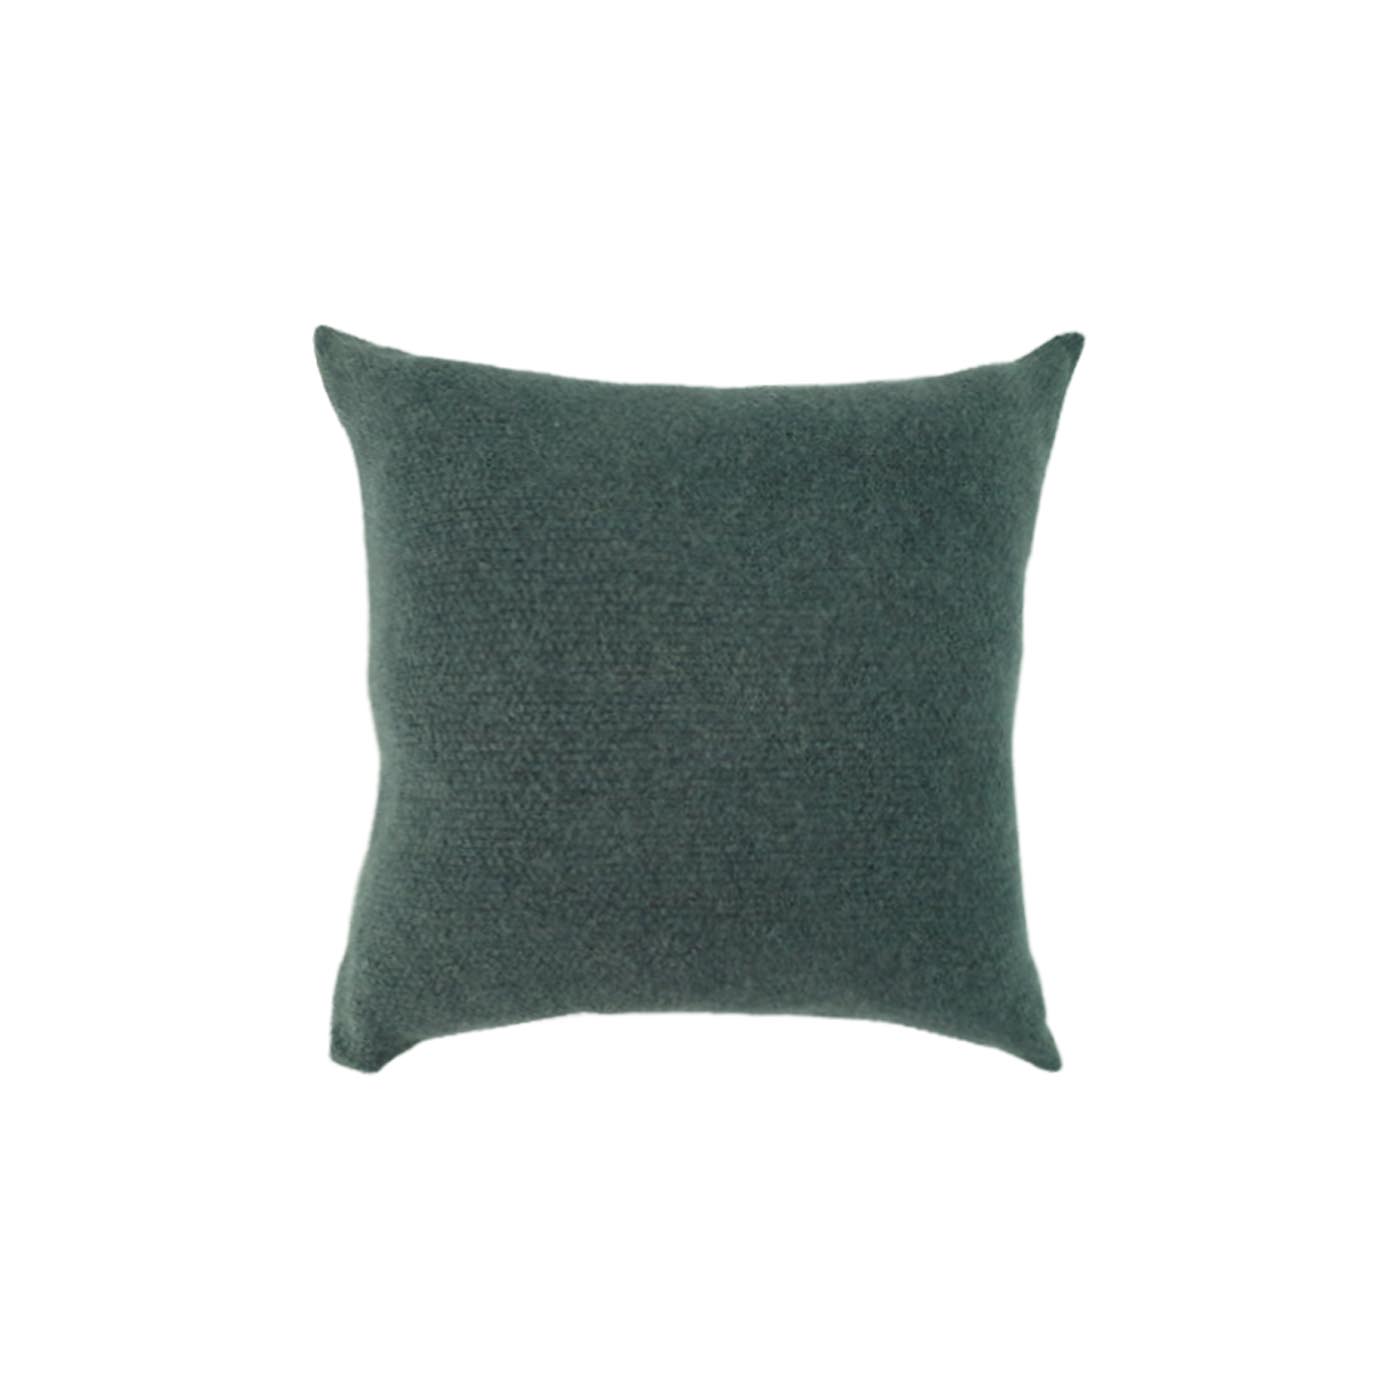 Filt Green Cushion